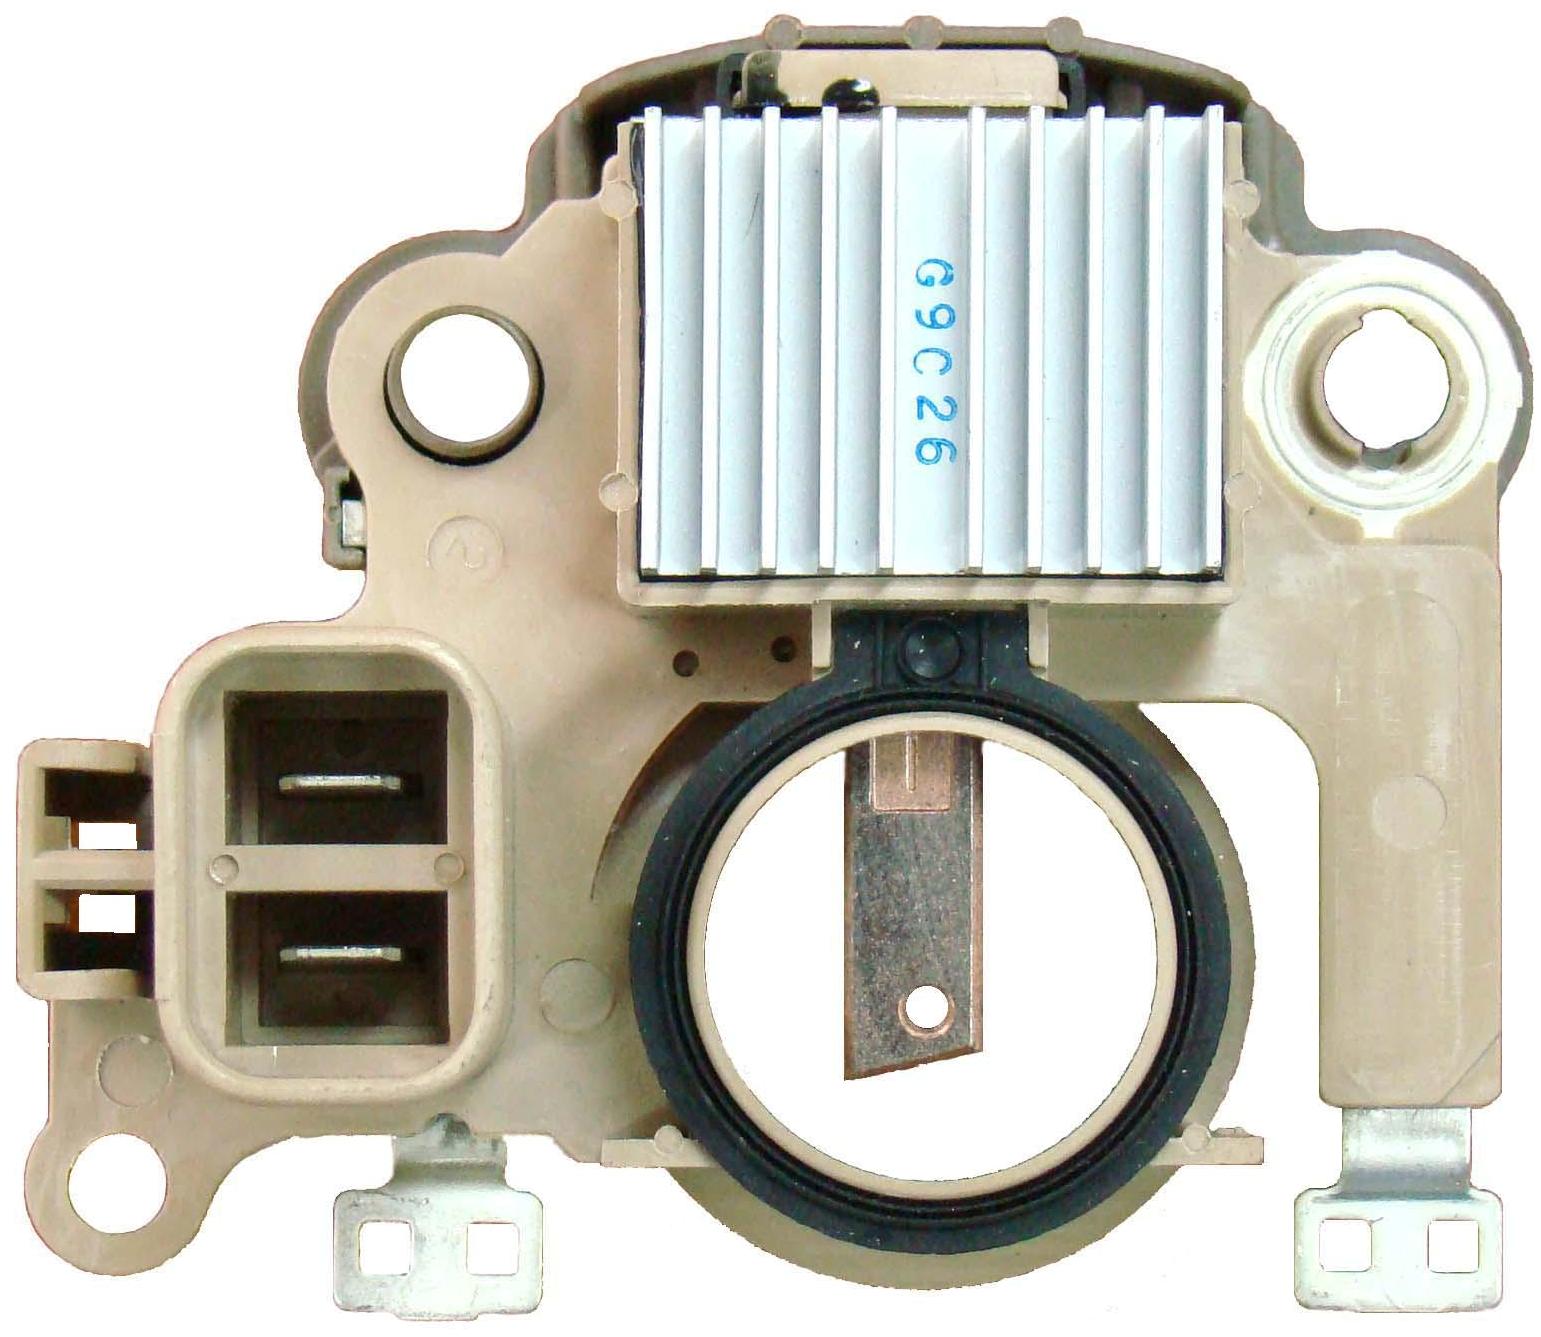 Voltage Regulator for Automobile(GNR-M012)  Made in Korea